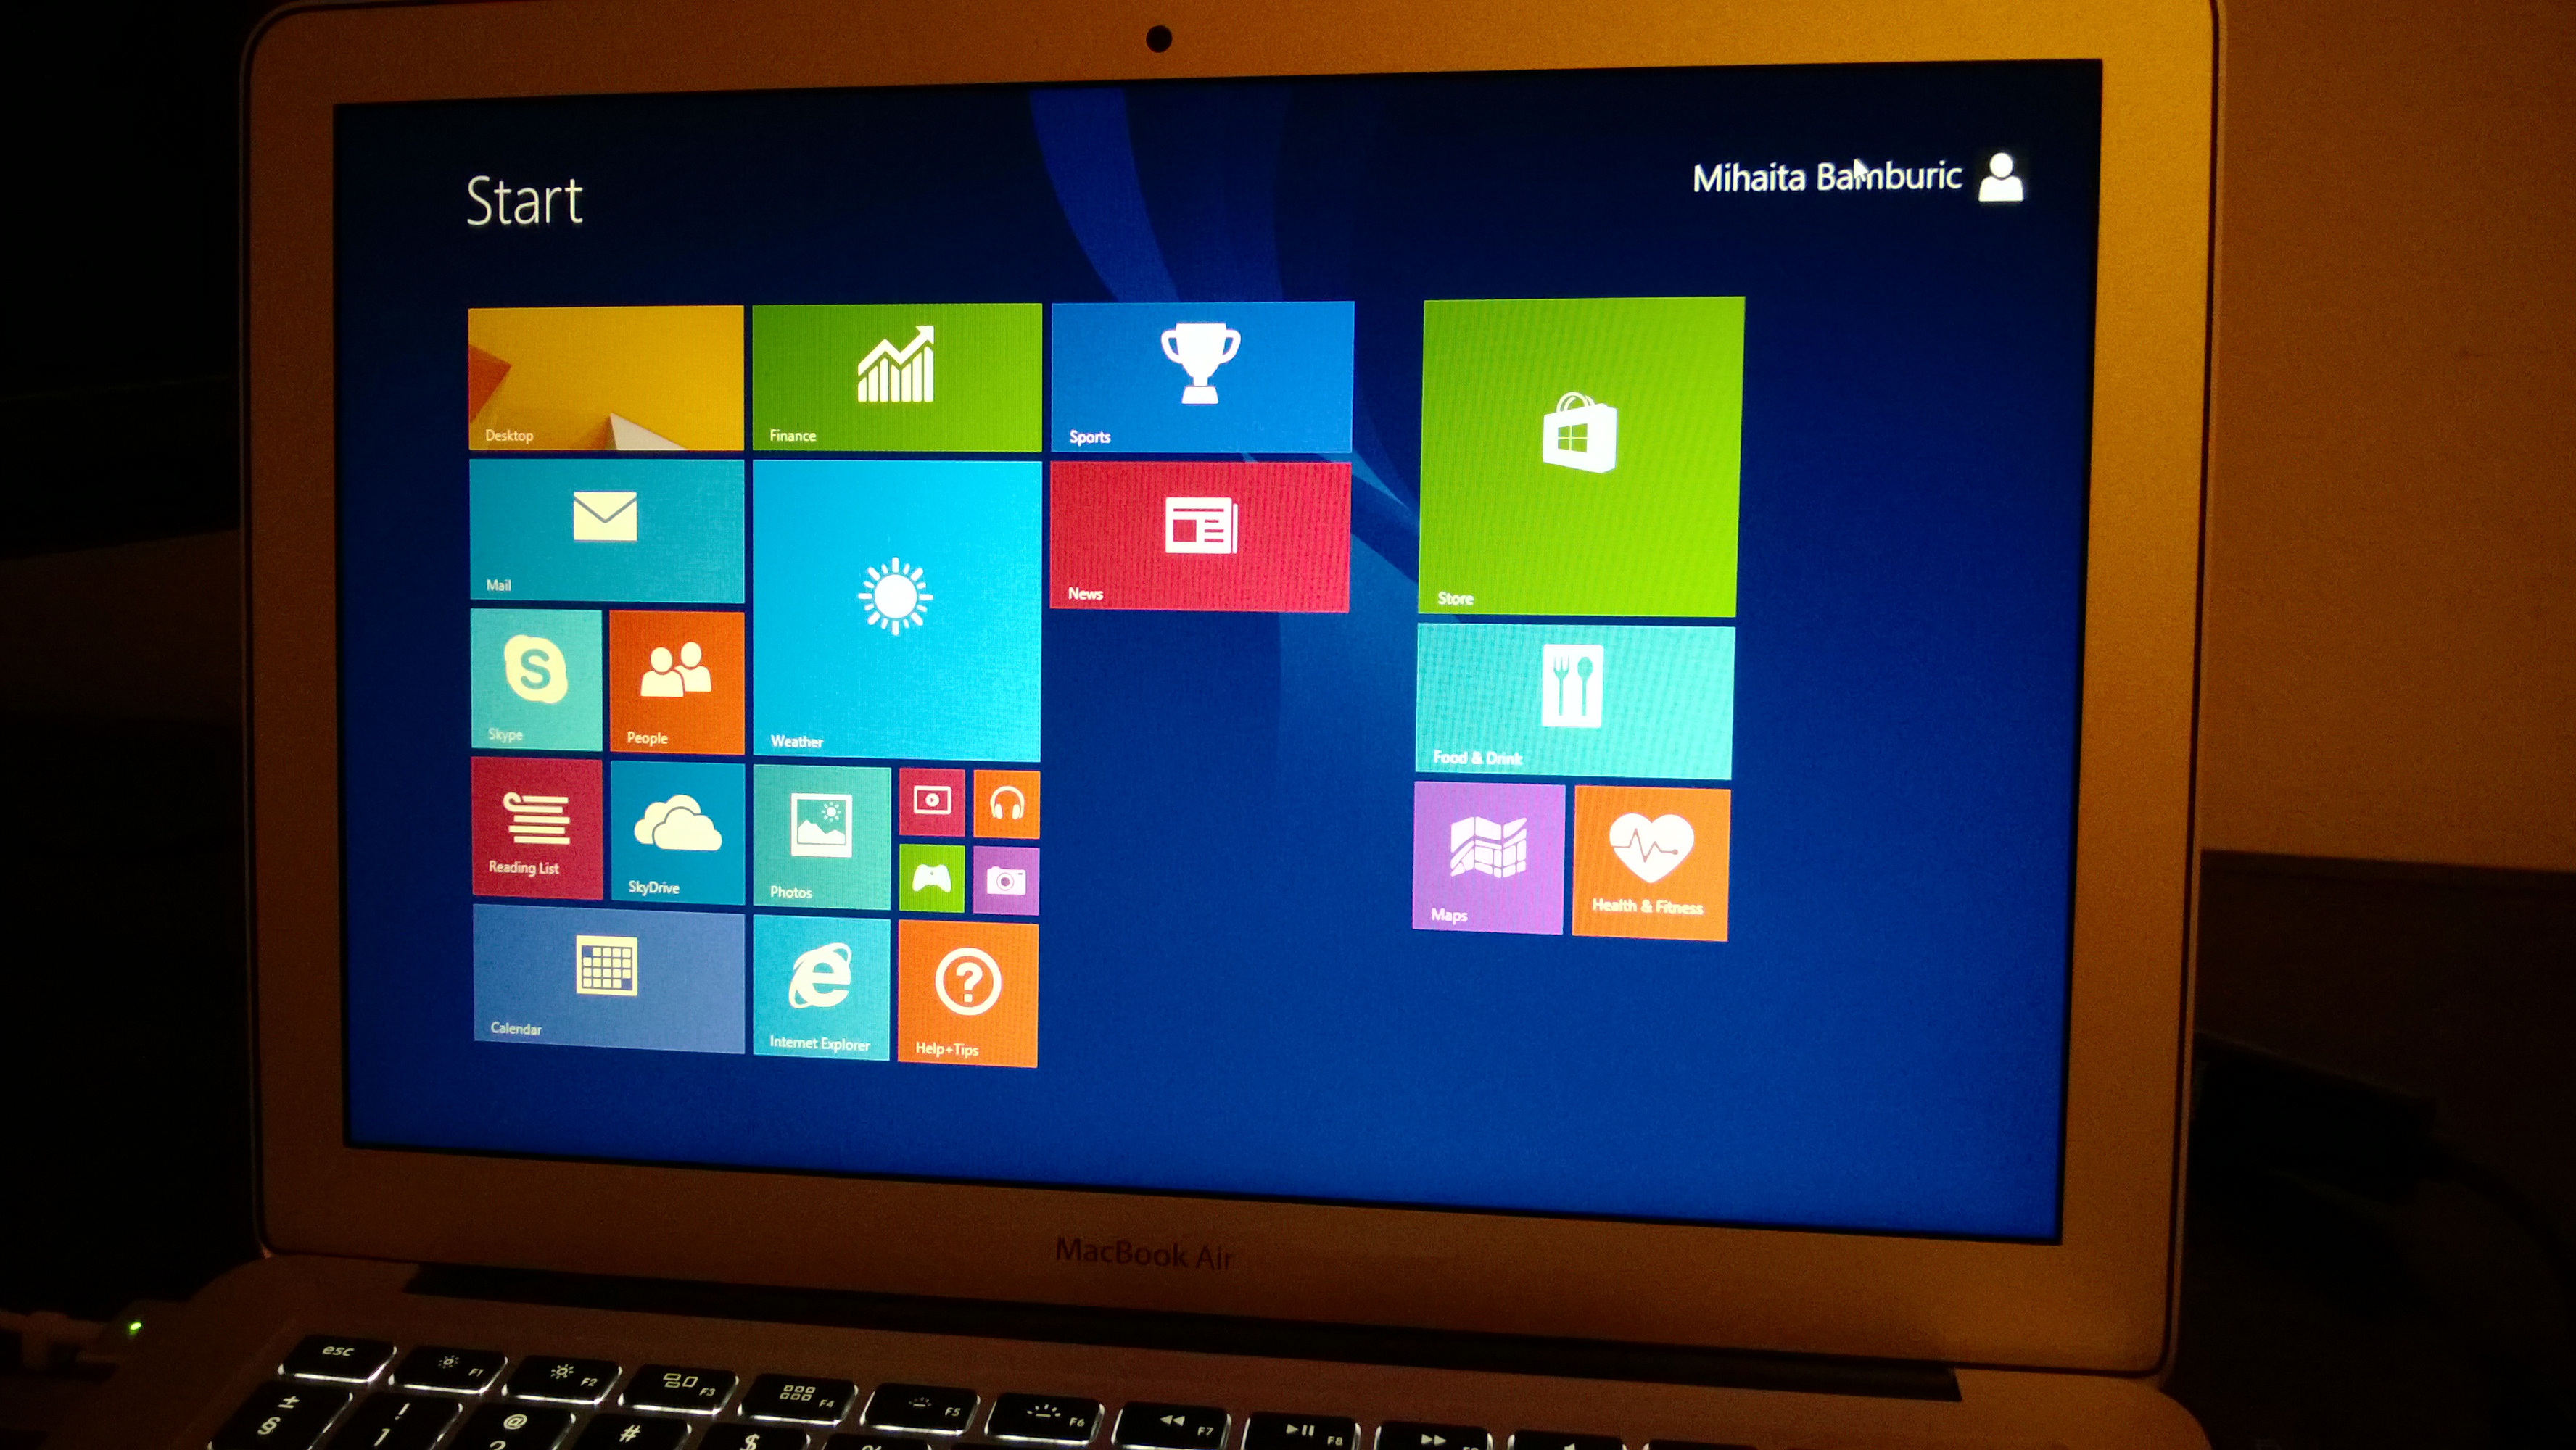 Install Windows 8.1 On Mac Boot Camp